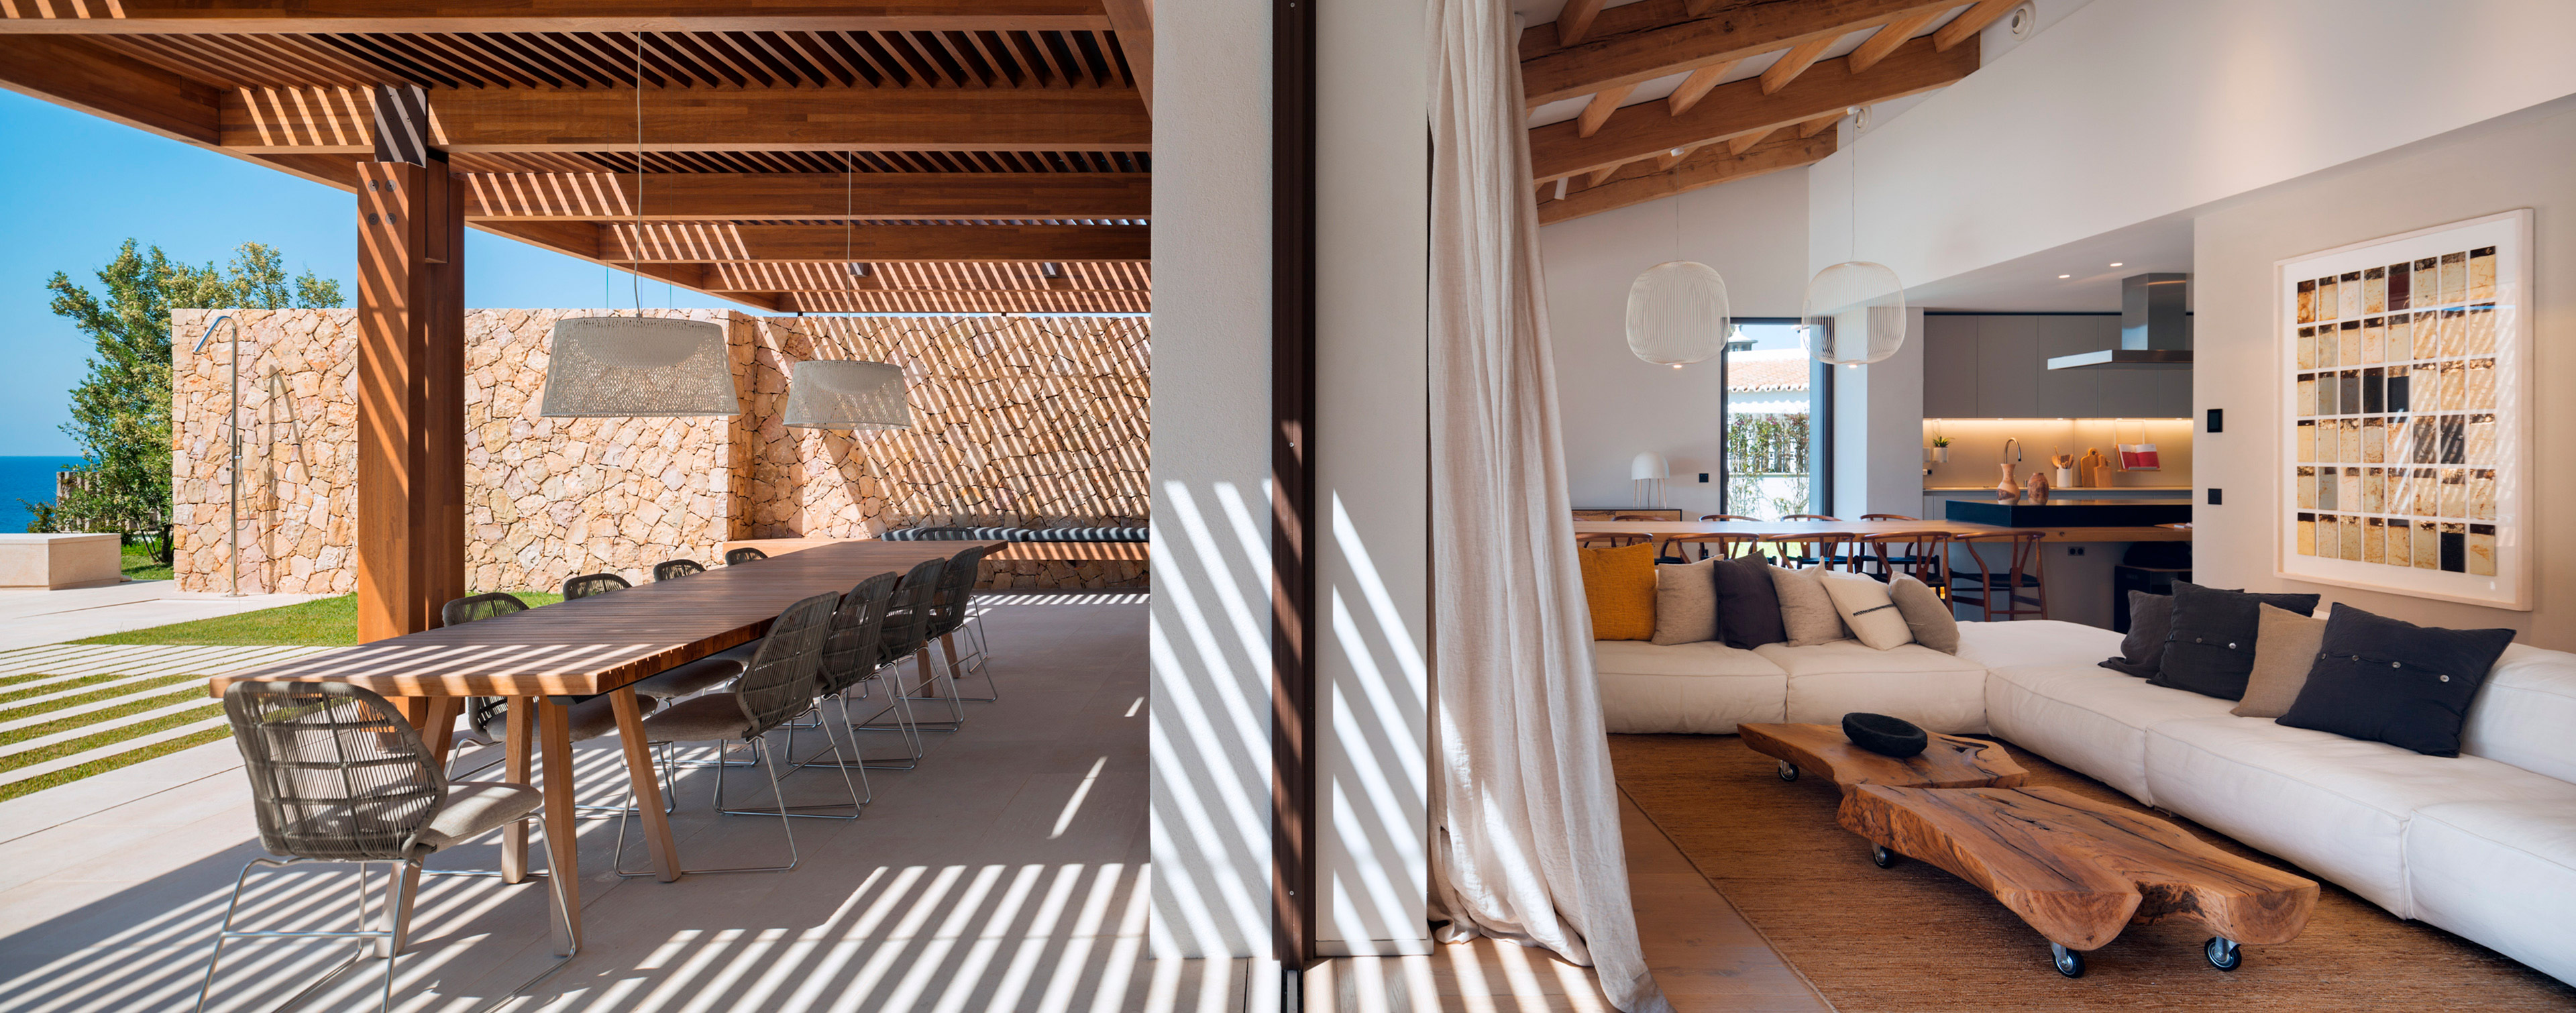 luv studio luxury architects algarve da rocha house IMG 03 - CASA DA ROCHA